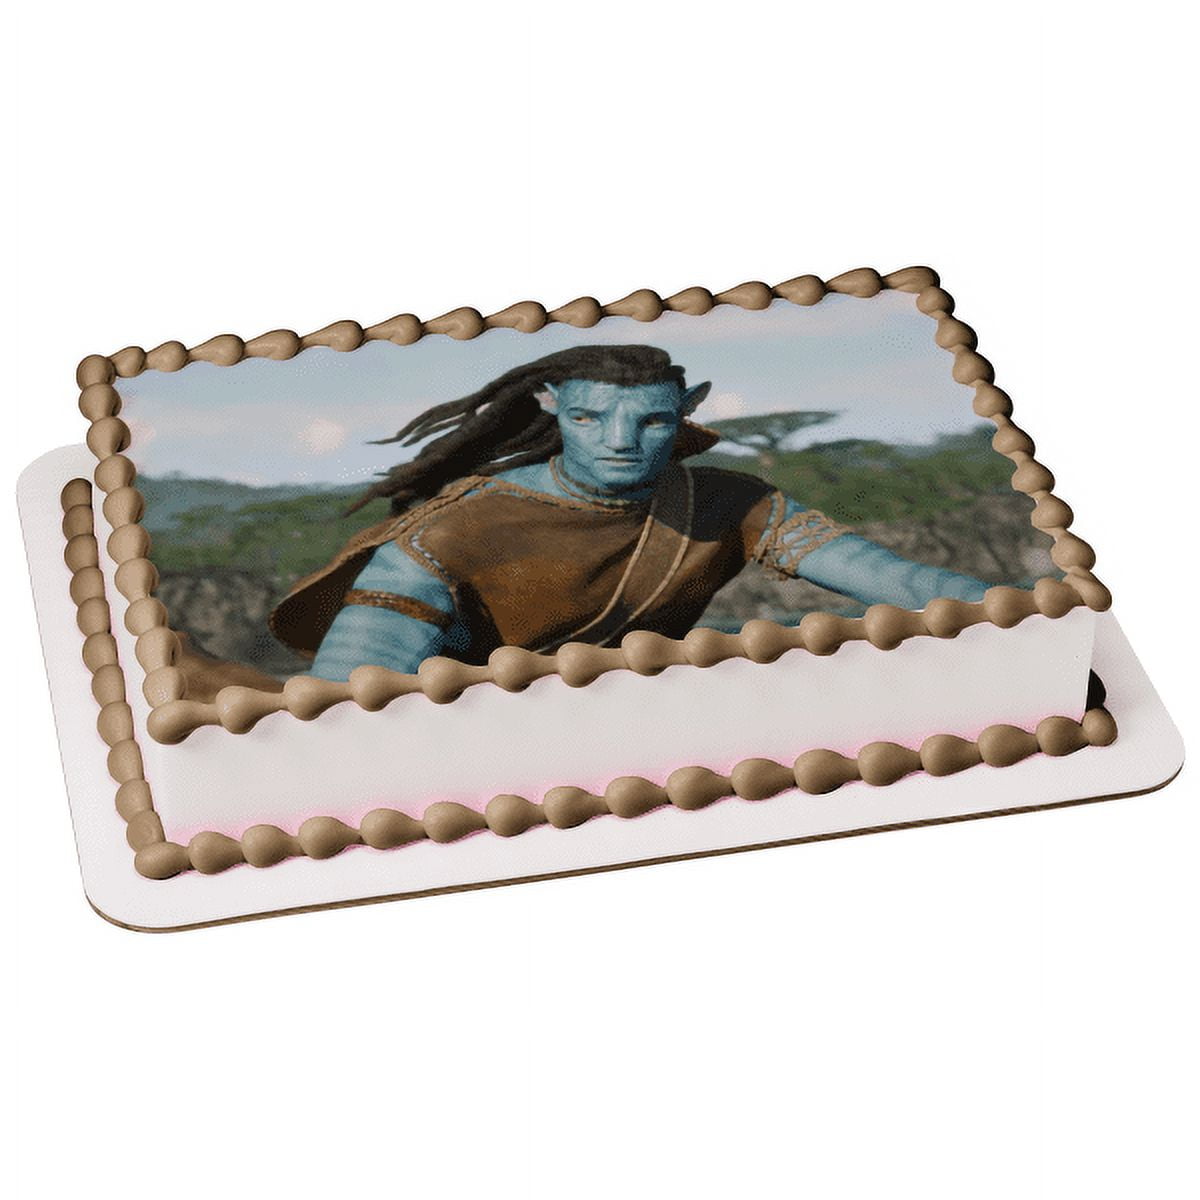 My most recent Avatar cake! : r/Avatar